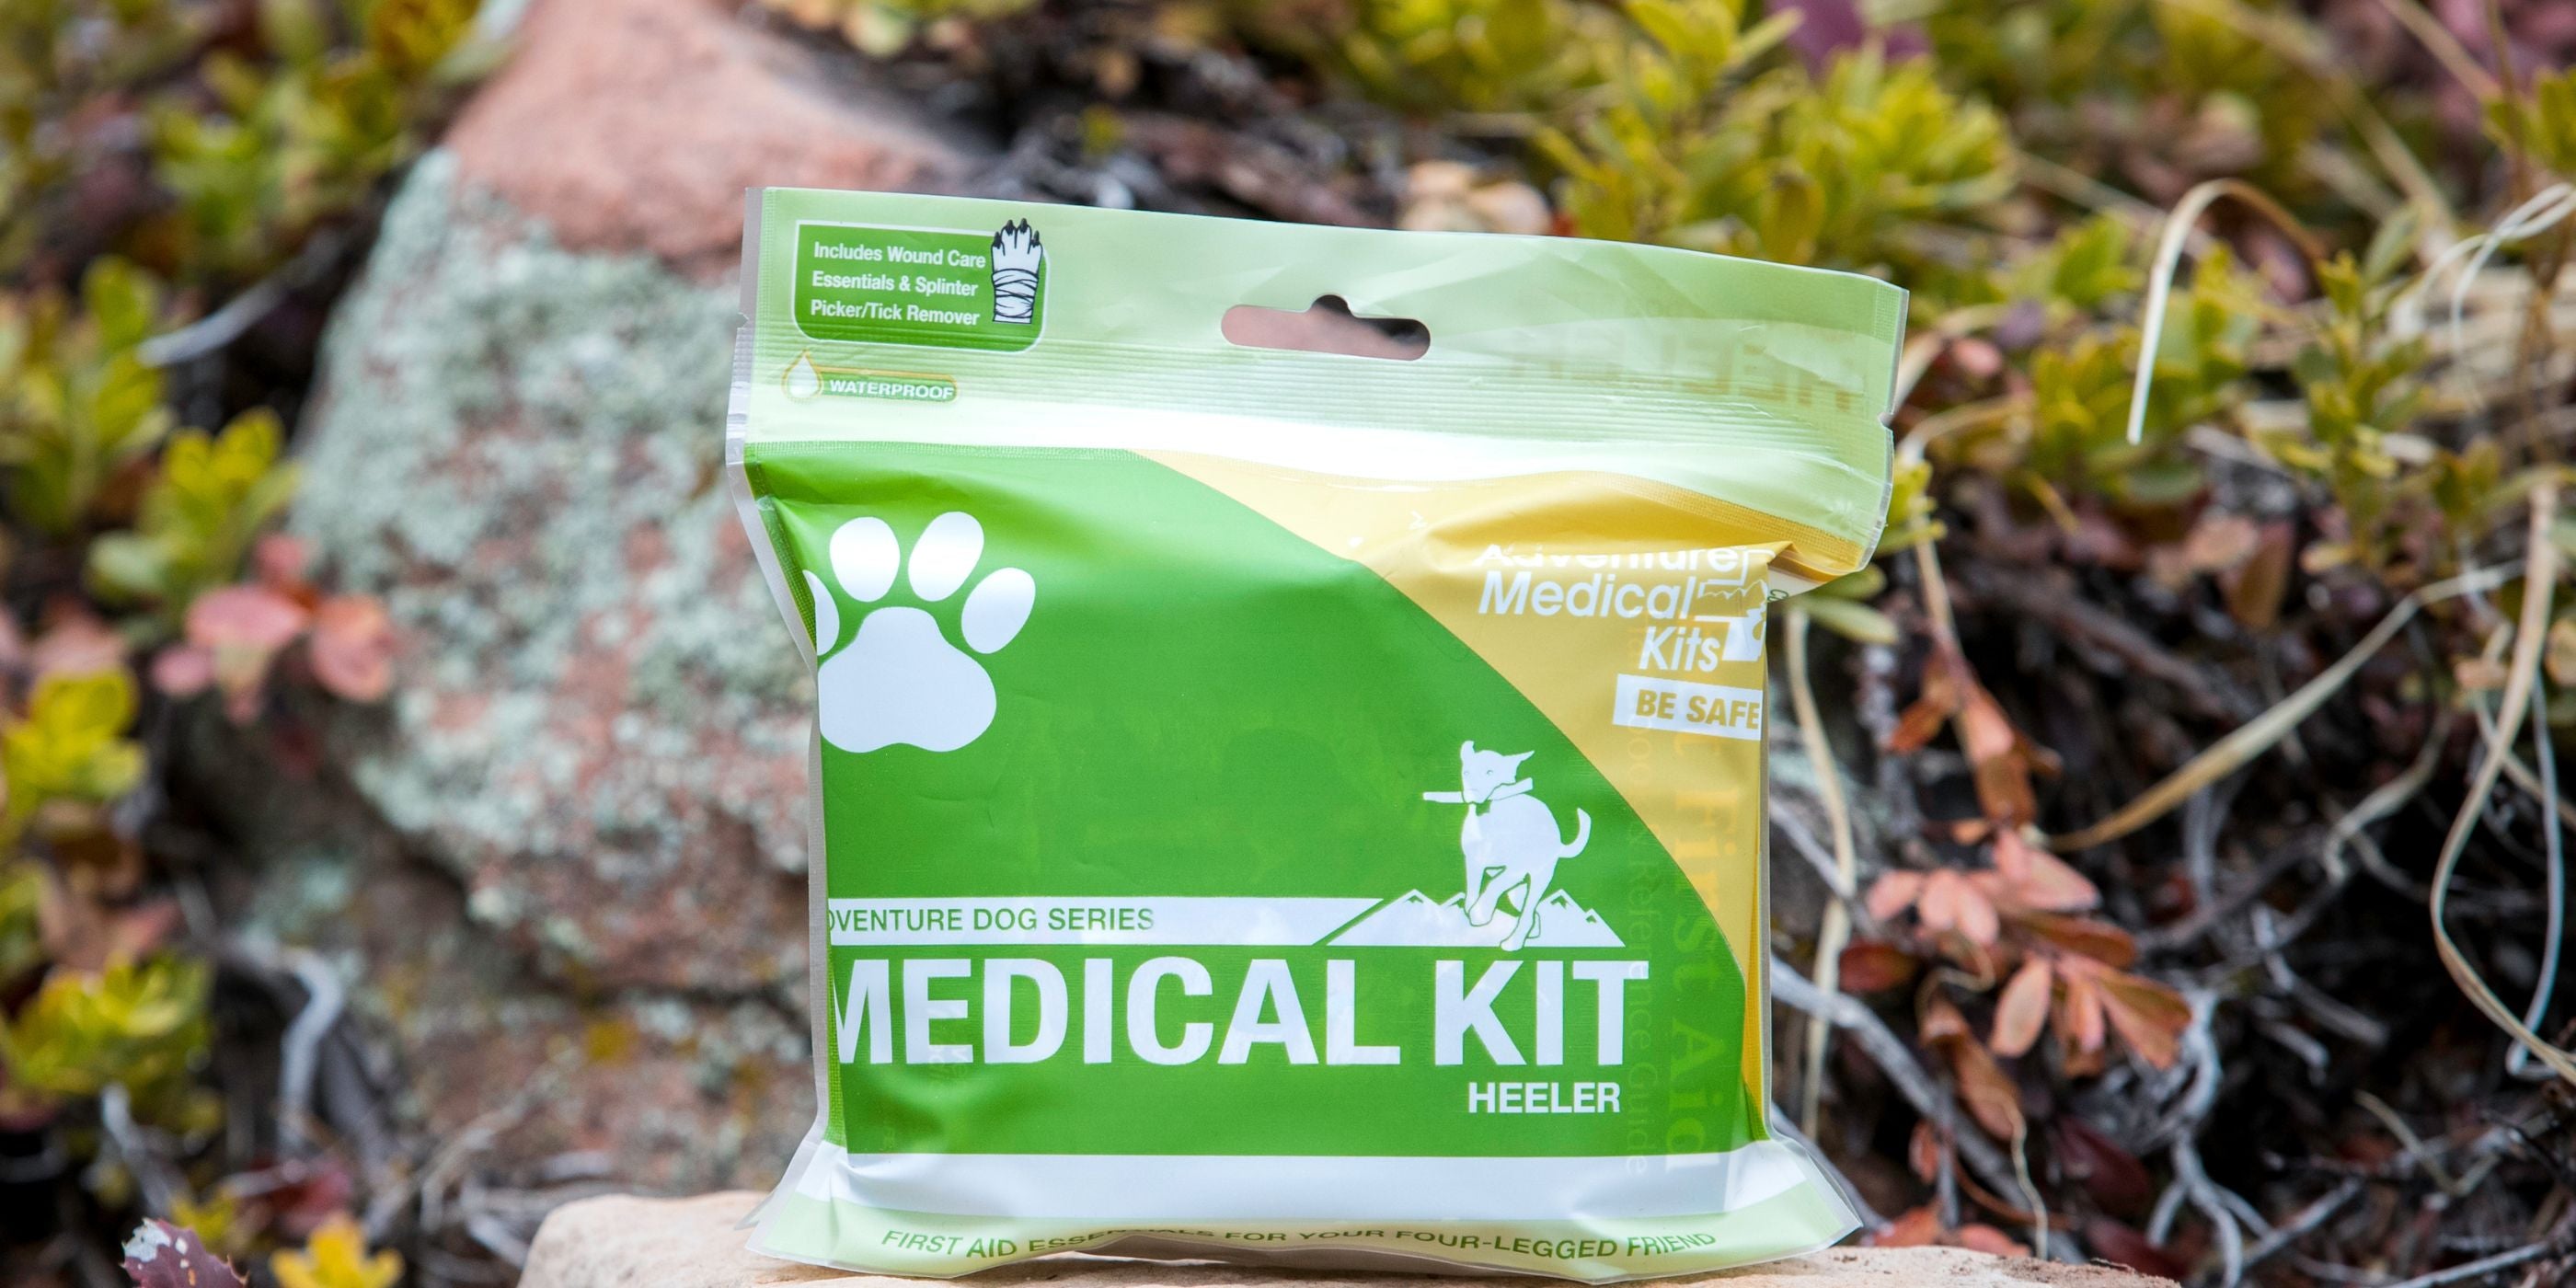 Heeler Dog Kit with rocks and greenery behind